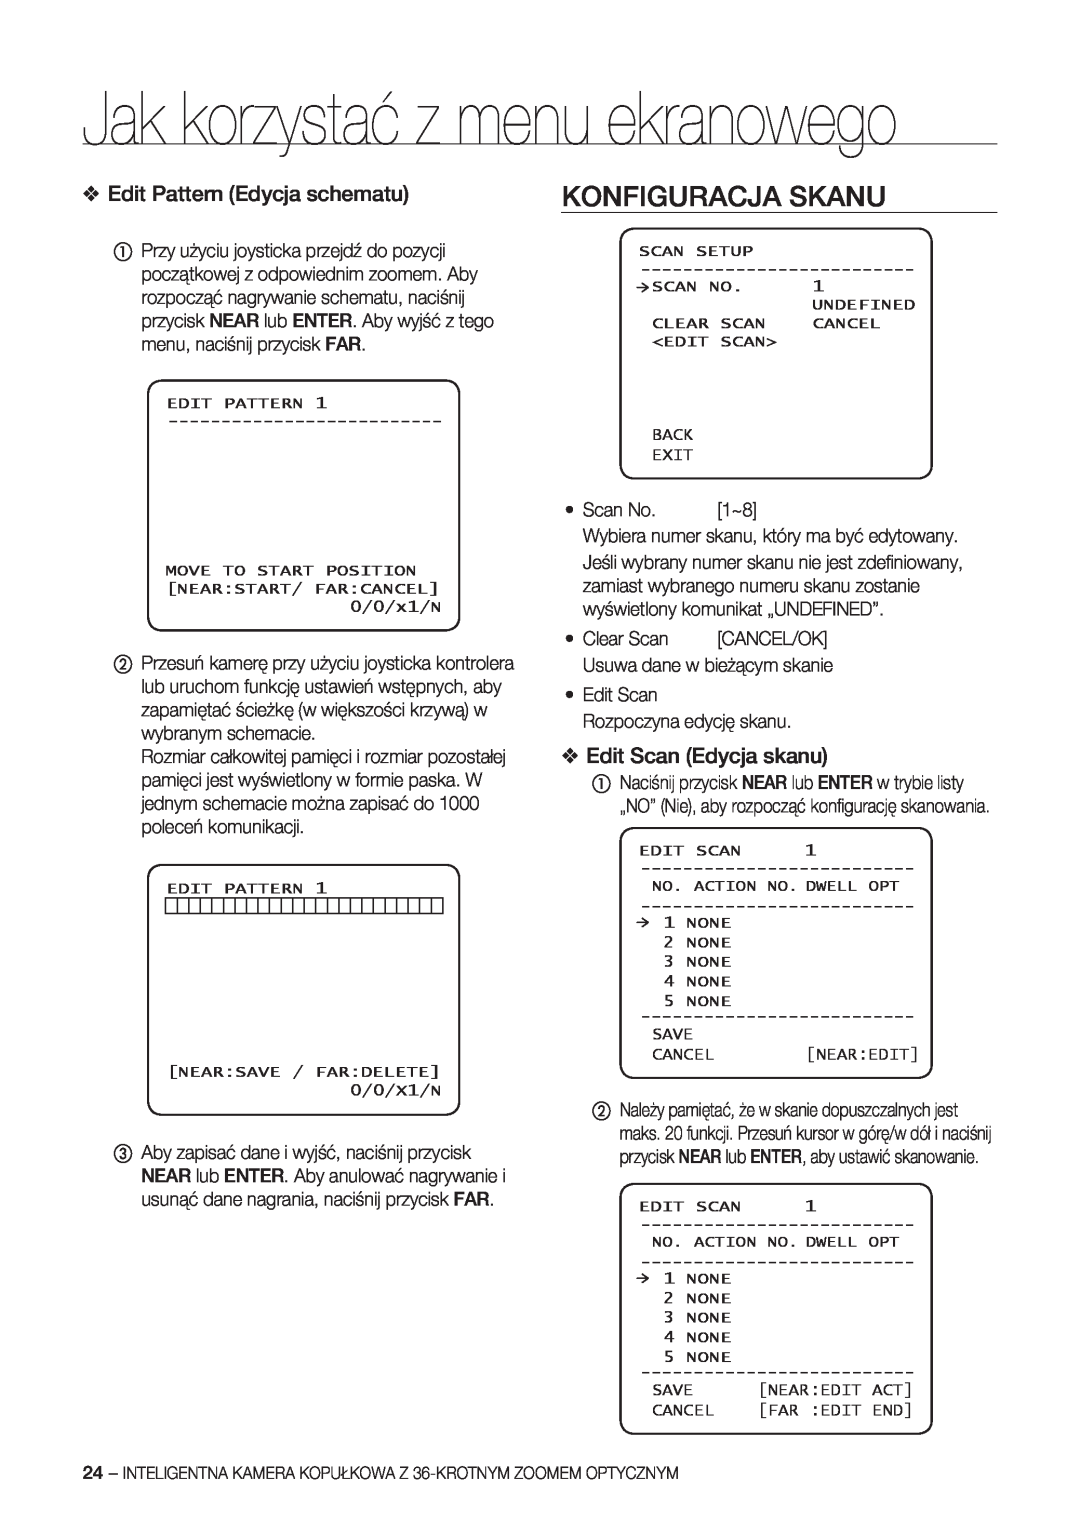 Samsung SCC-C7478P manual Konfiguracja Skanu, Edit Pattern Edycja schematu, Edit Scan Edycja skanu 